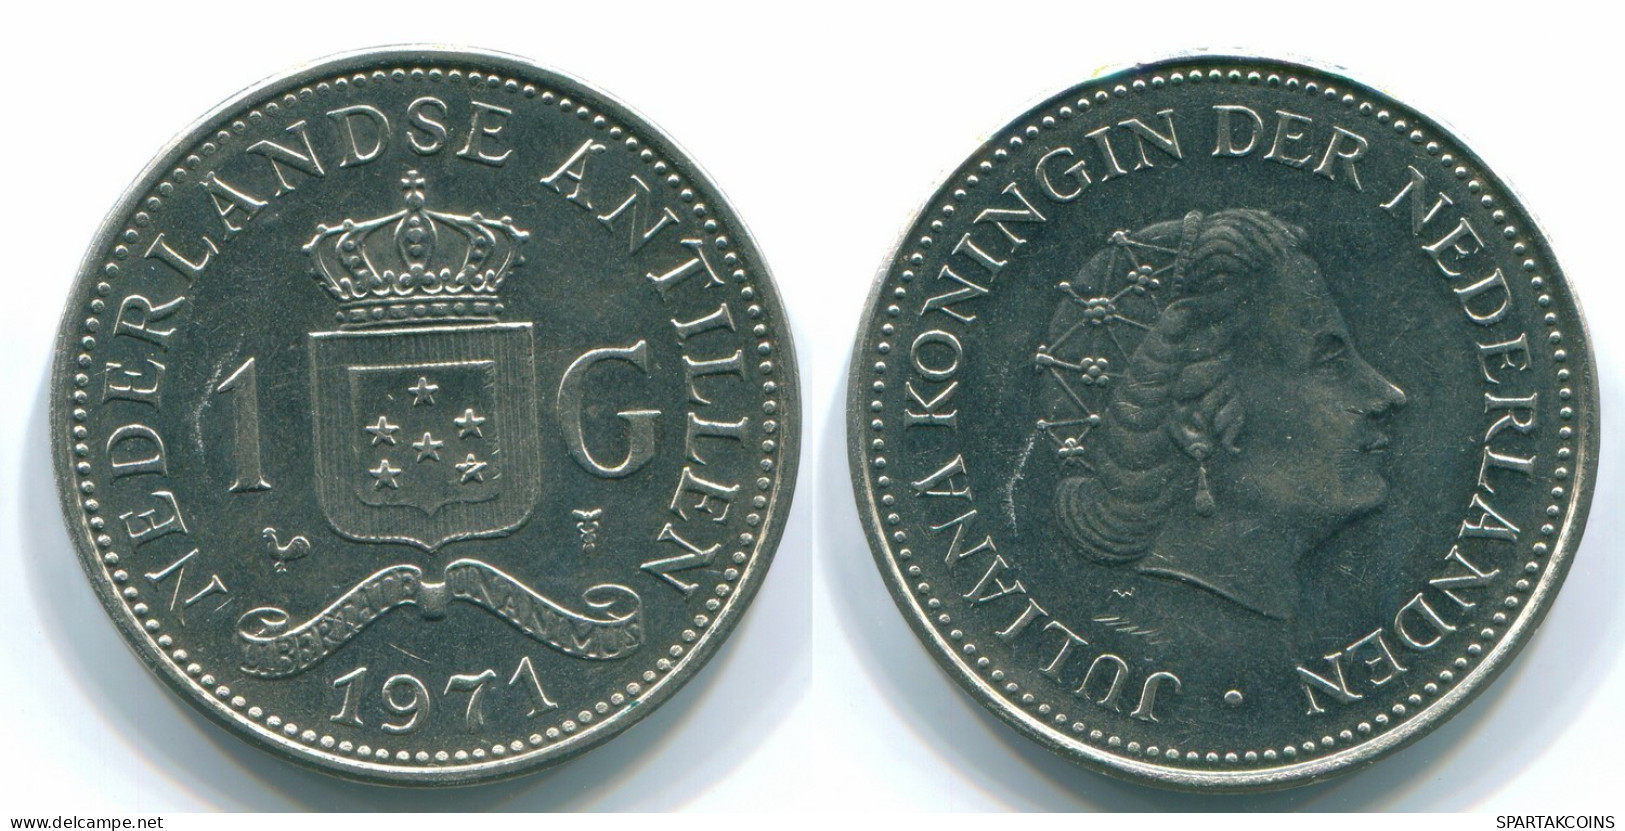 1 GULDEN 1971 NETHERLANDS ANTILLES Nickel Colonial Coin #S11951.U.A - Netherlands Antilles